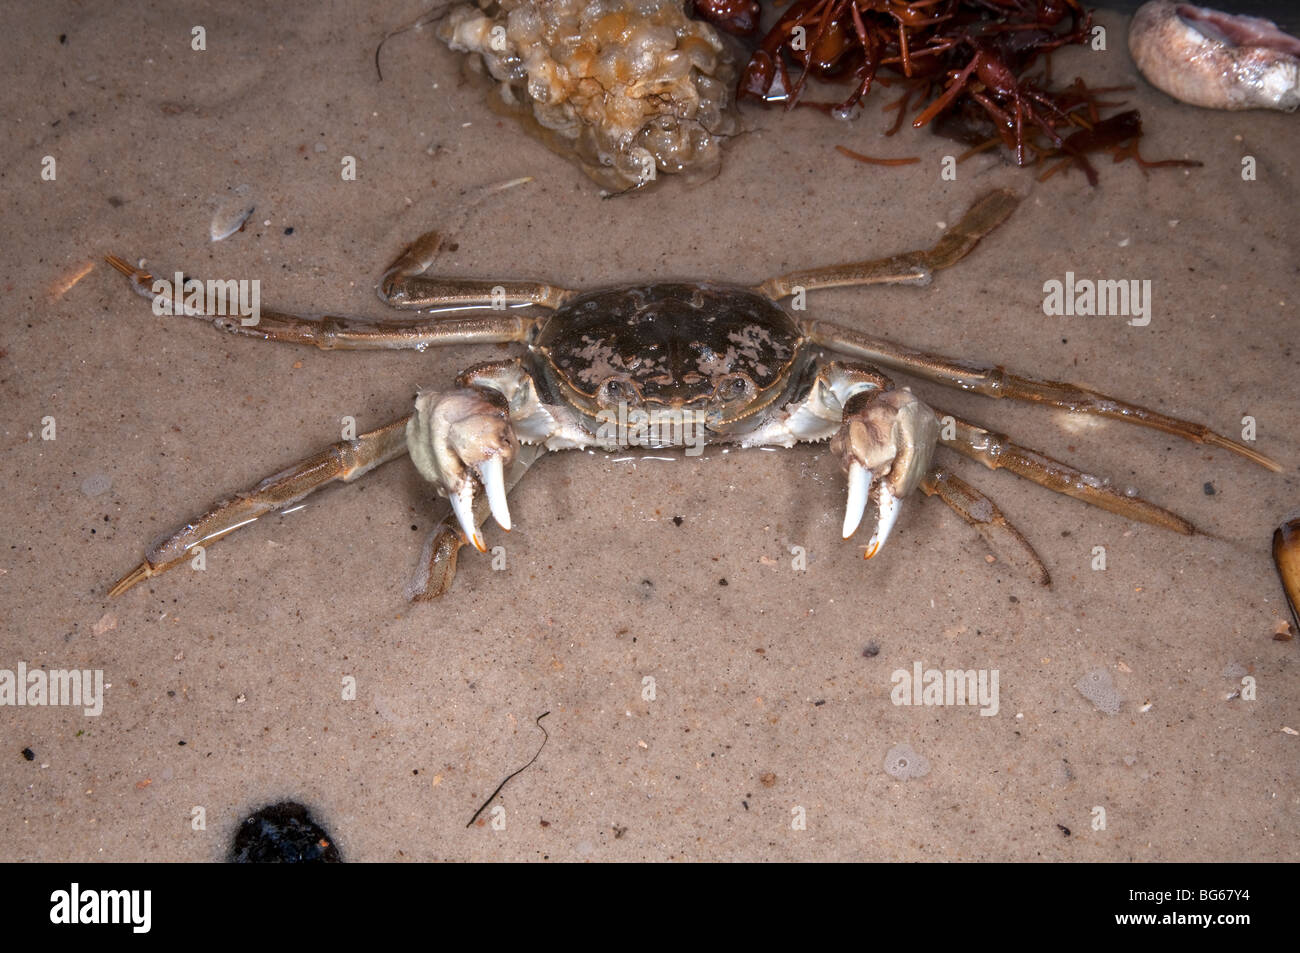 Crabe chinois (Eriocheir sinensis) en position défensive. Banque D'Images